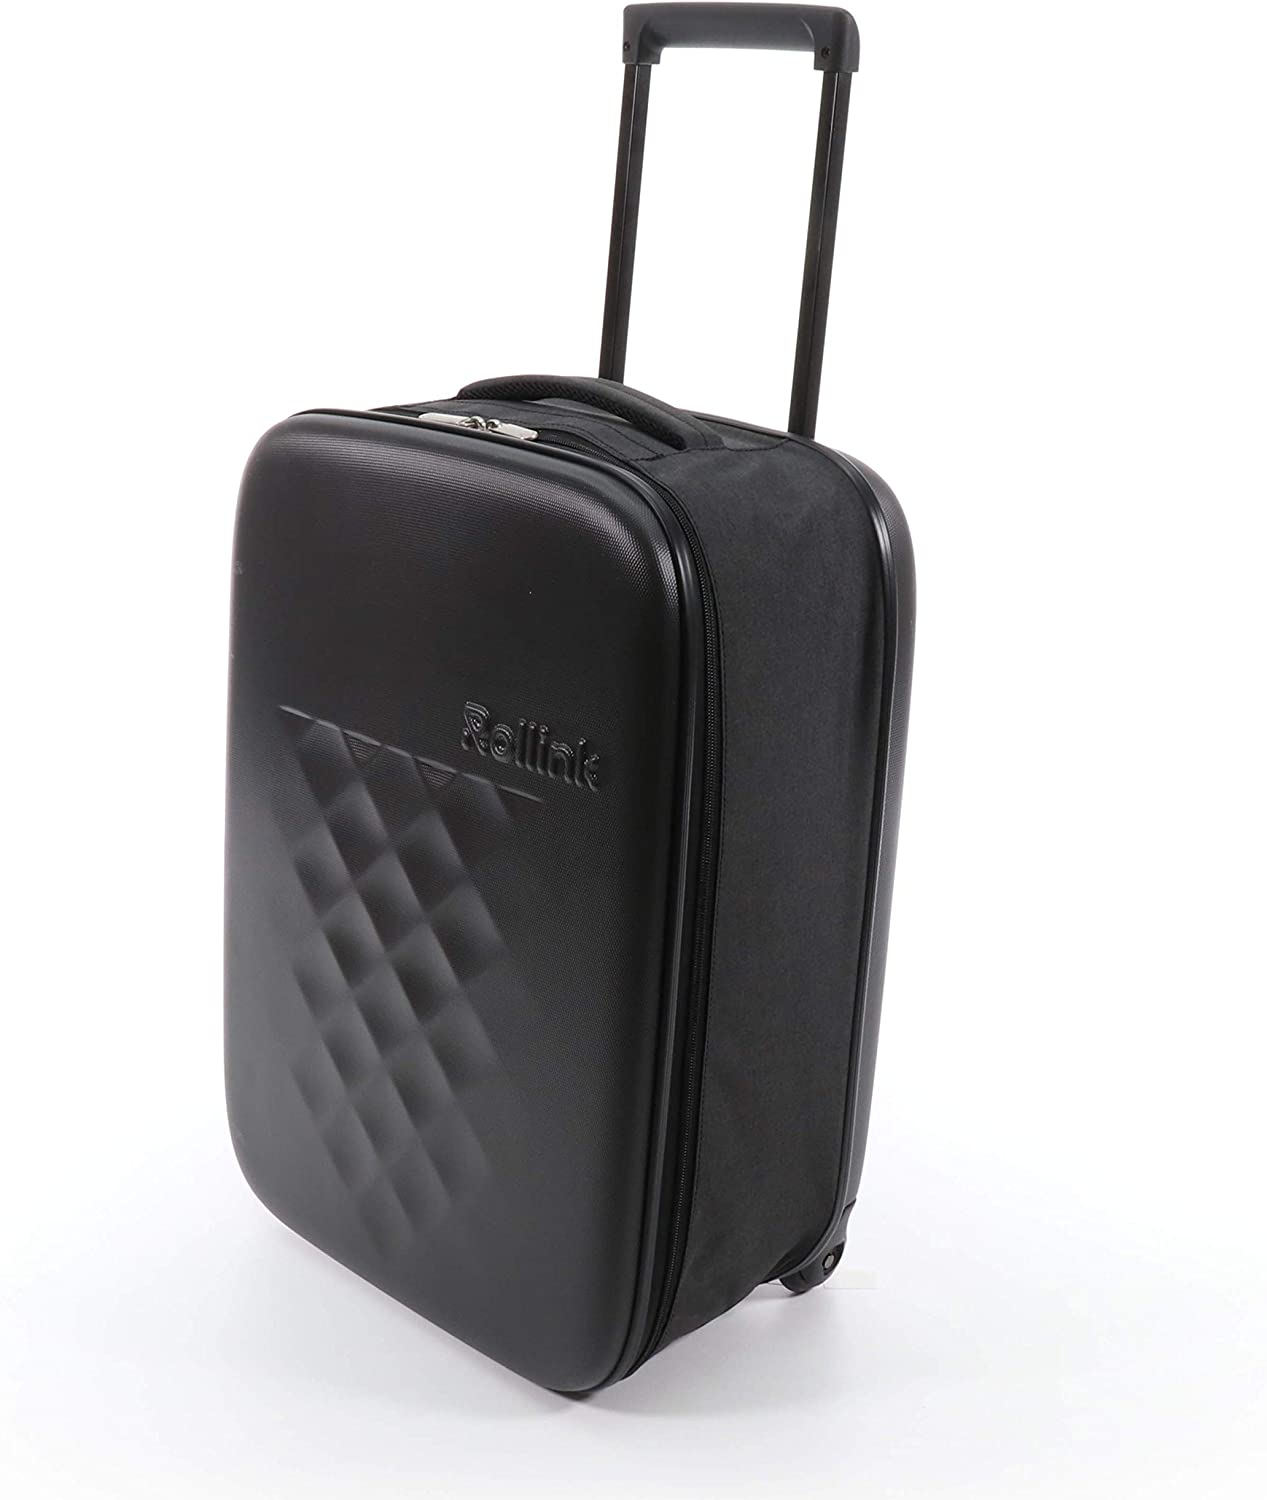 Rollink Flex 21 Carry On Luggage